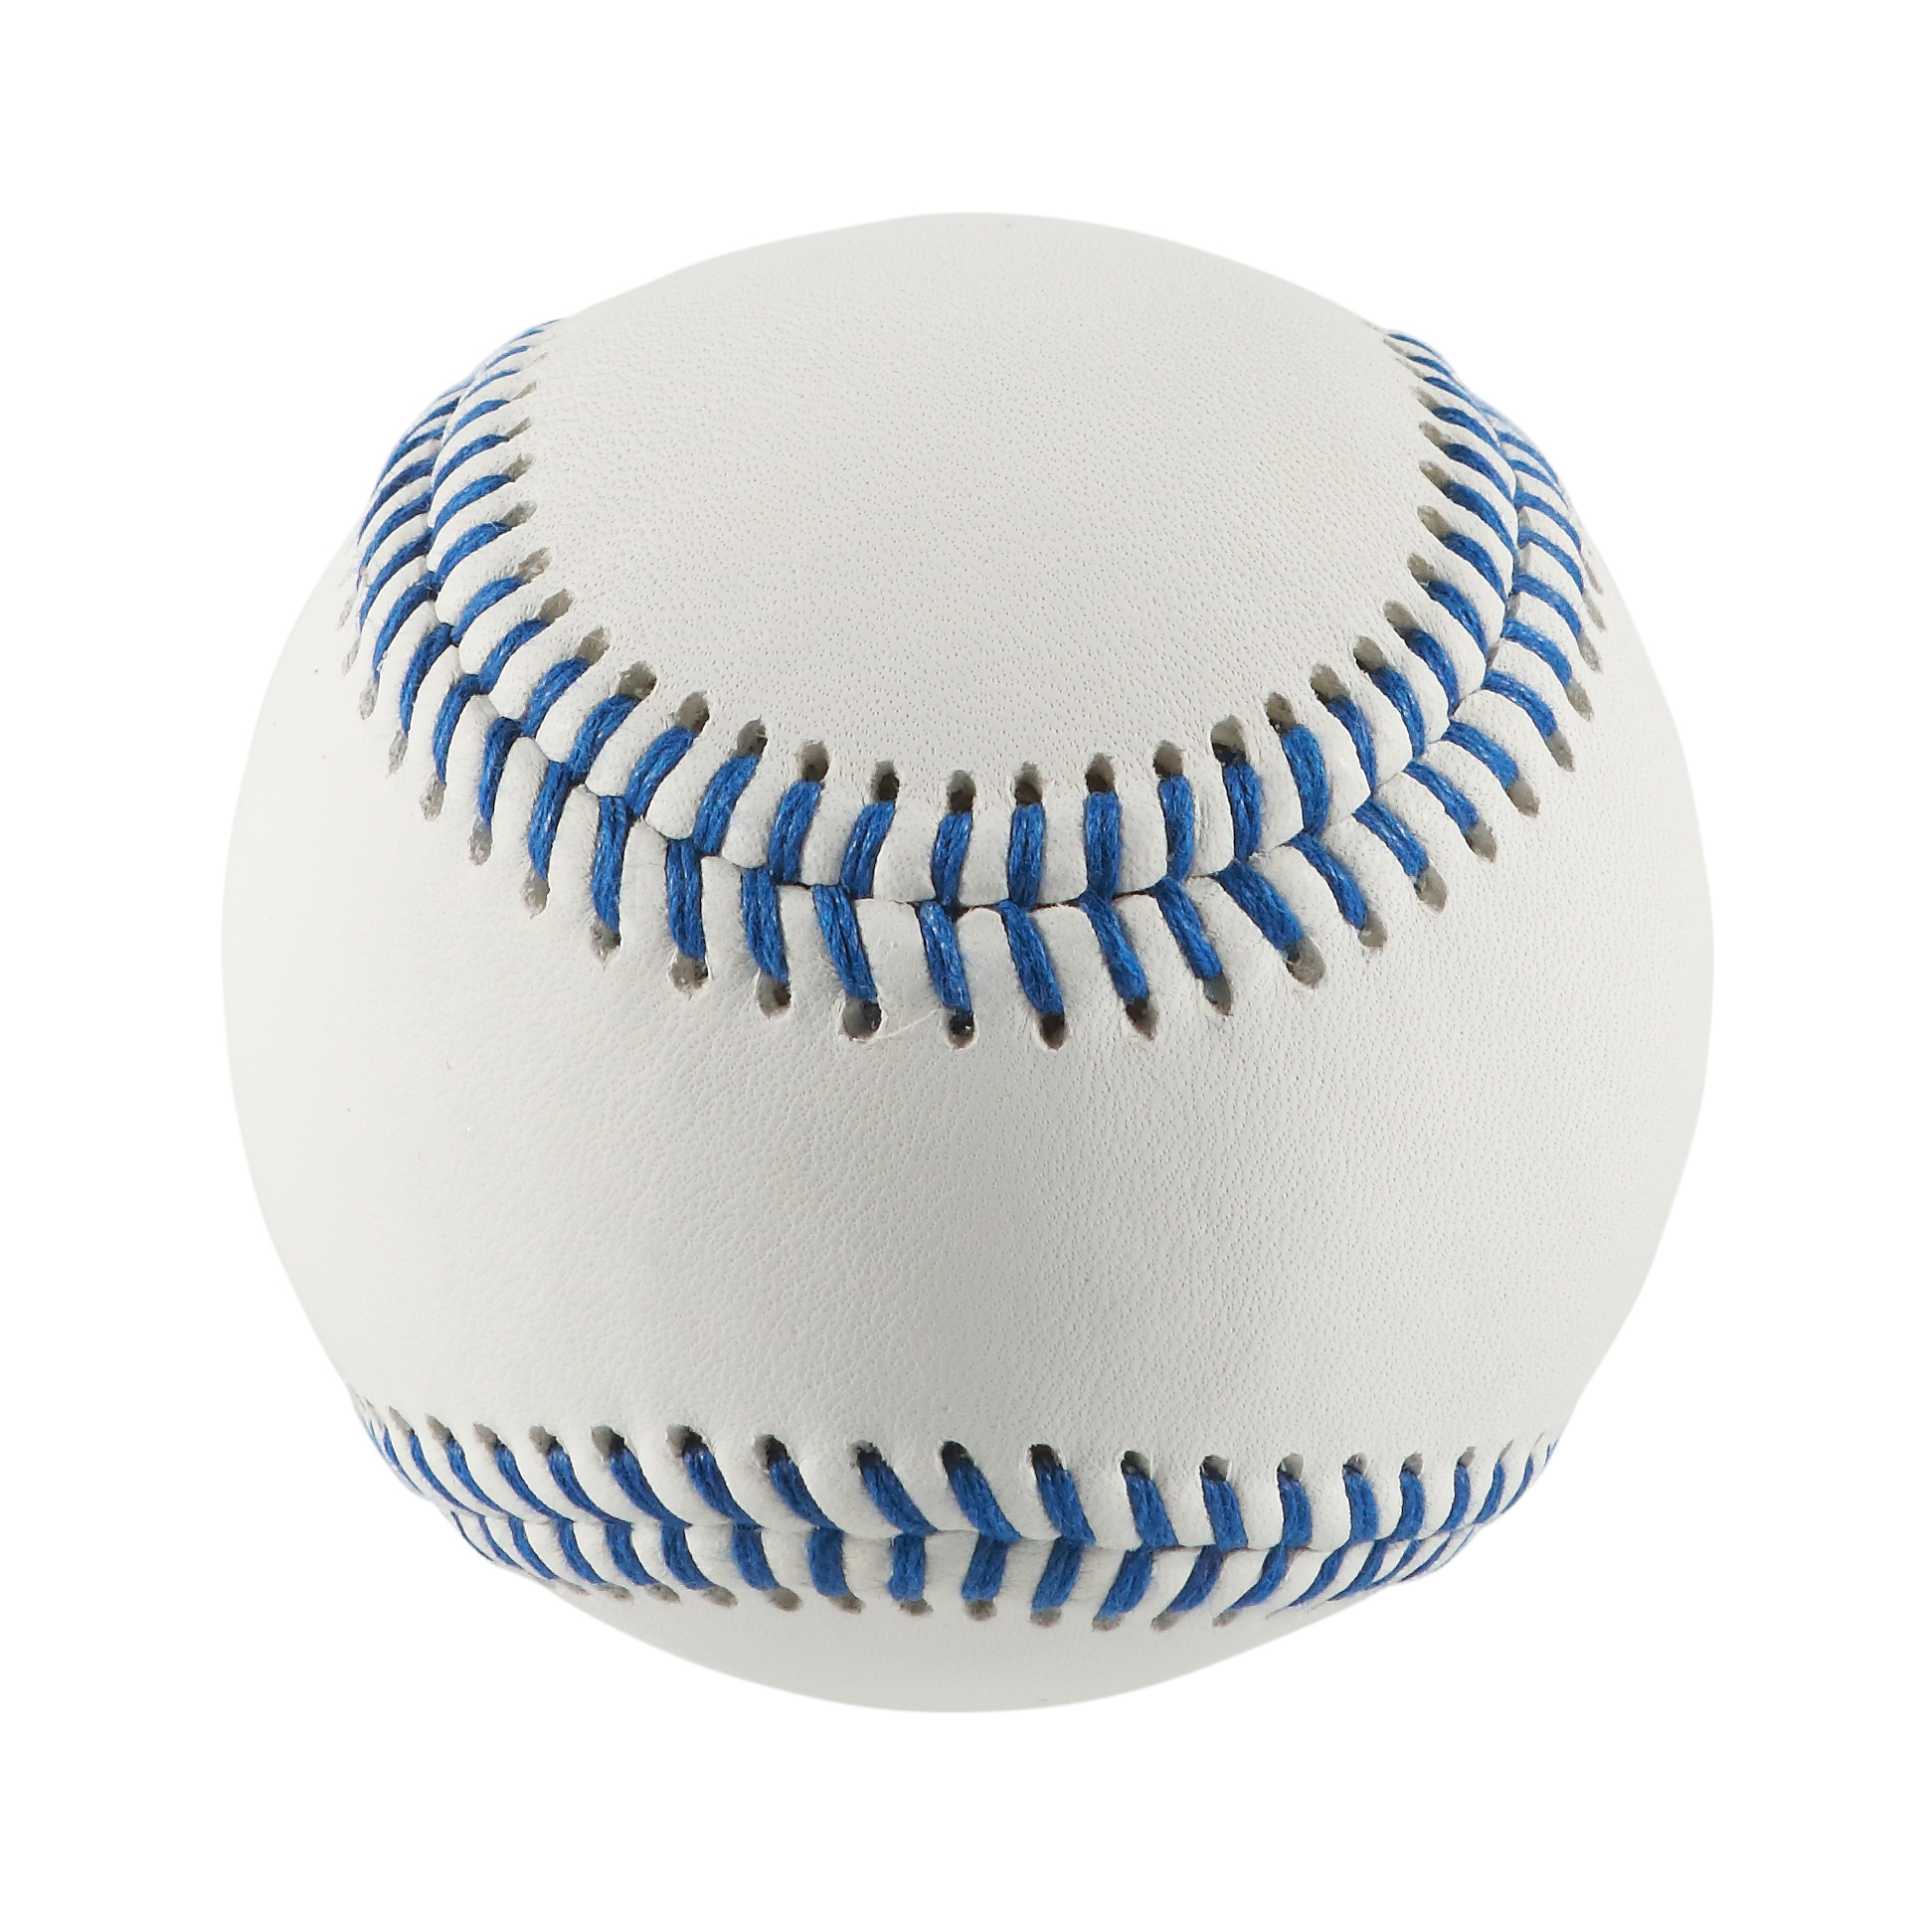 Bester Preis Großhandel Vollnarbenleder Outdoor-Spiel Baseball